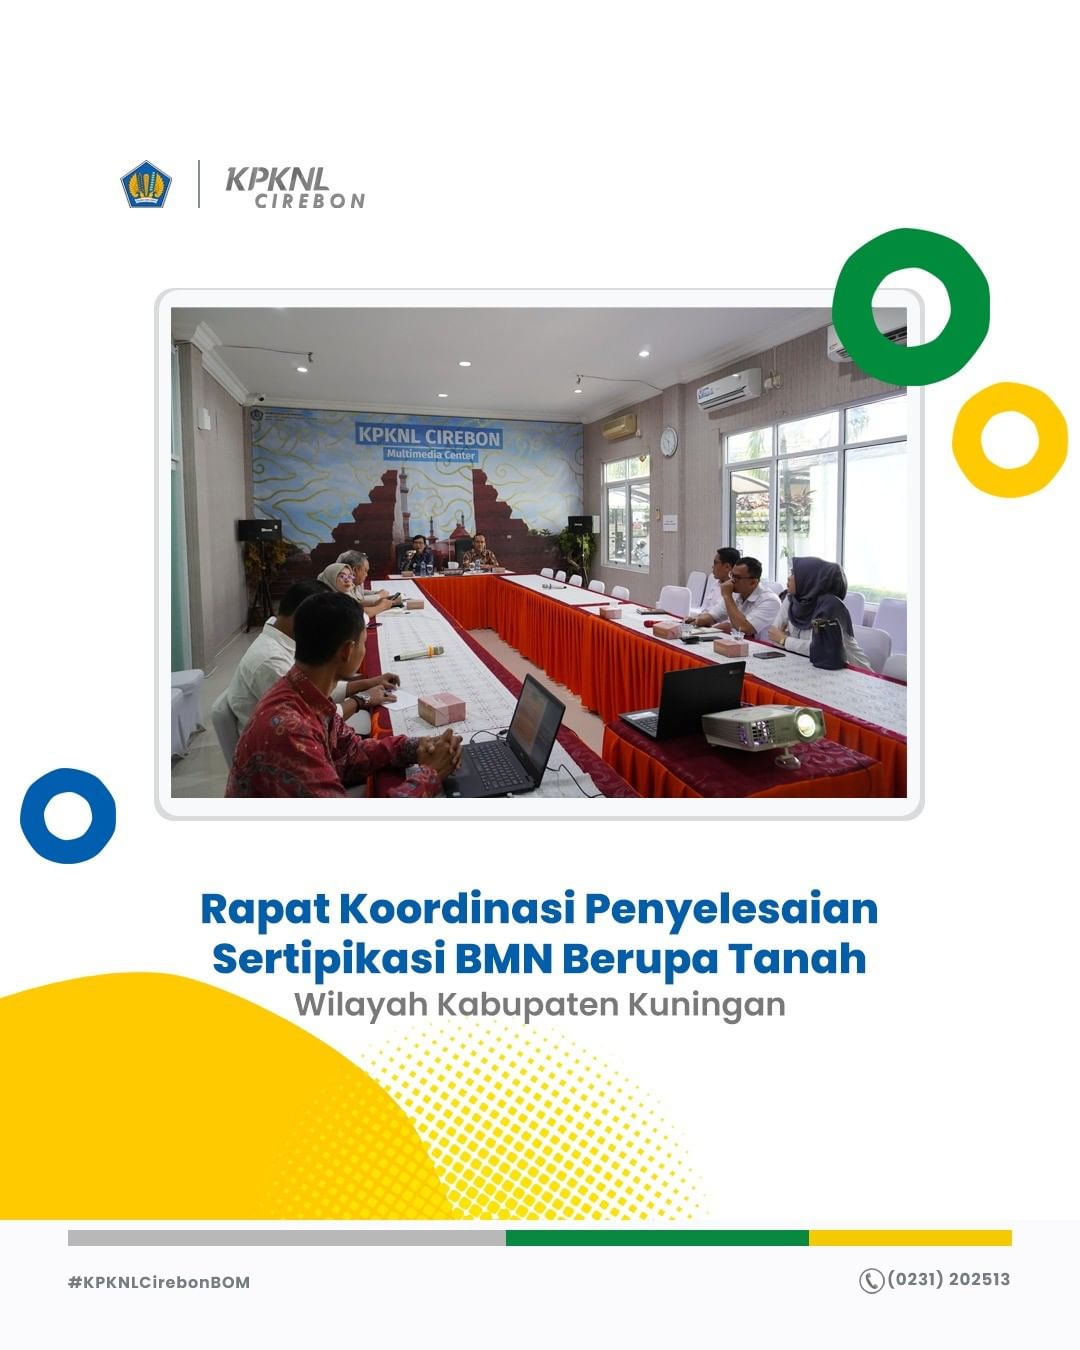 Rapat Koordinasi Penyelesaian Sertipikasi BMN berupa tanah di Wilayah Kabupaten Kuningan